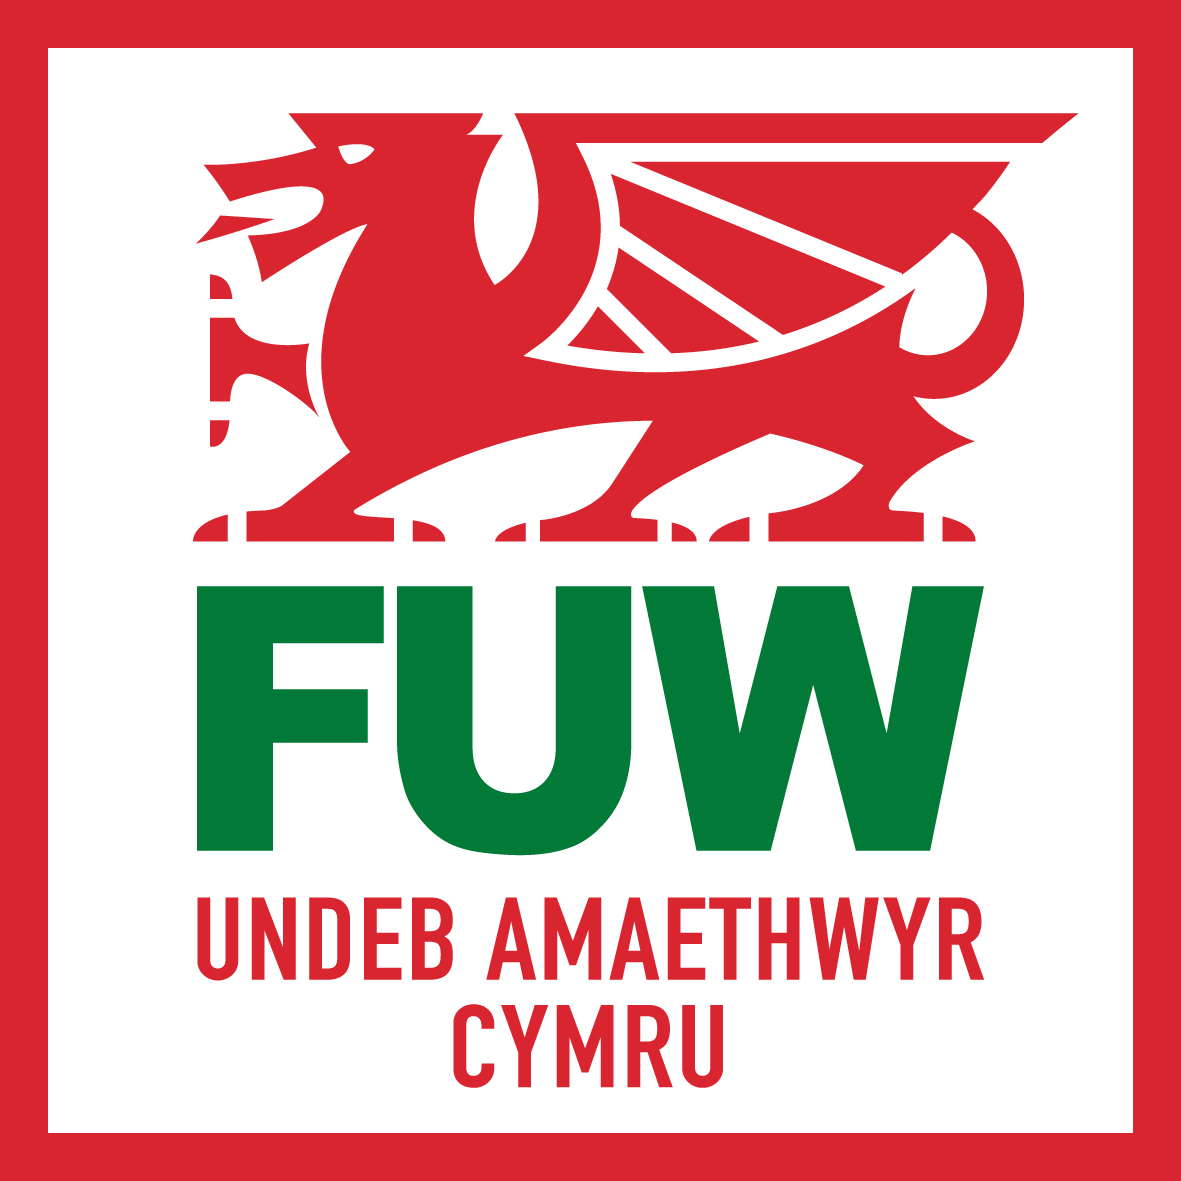 Farmers' Union of Wales